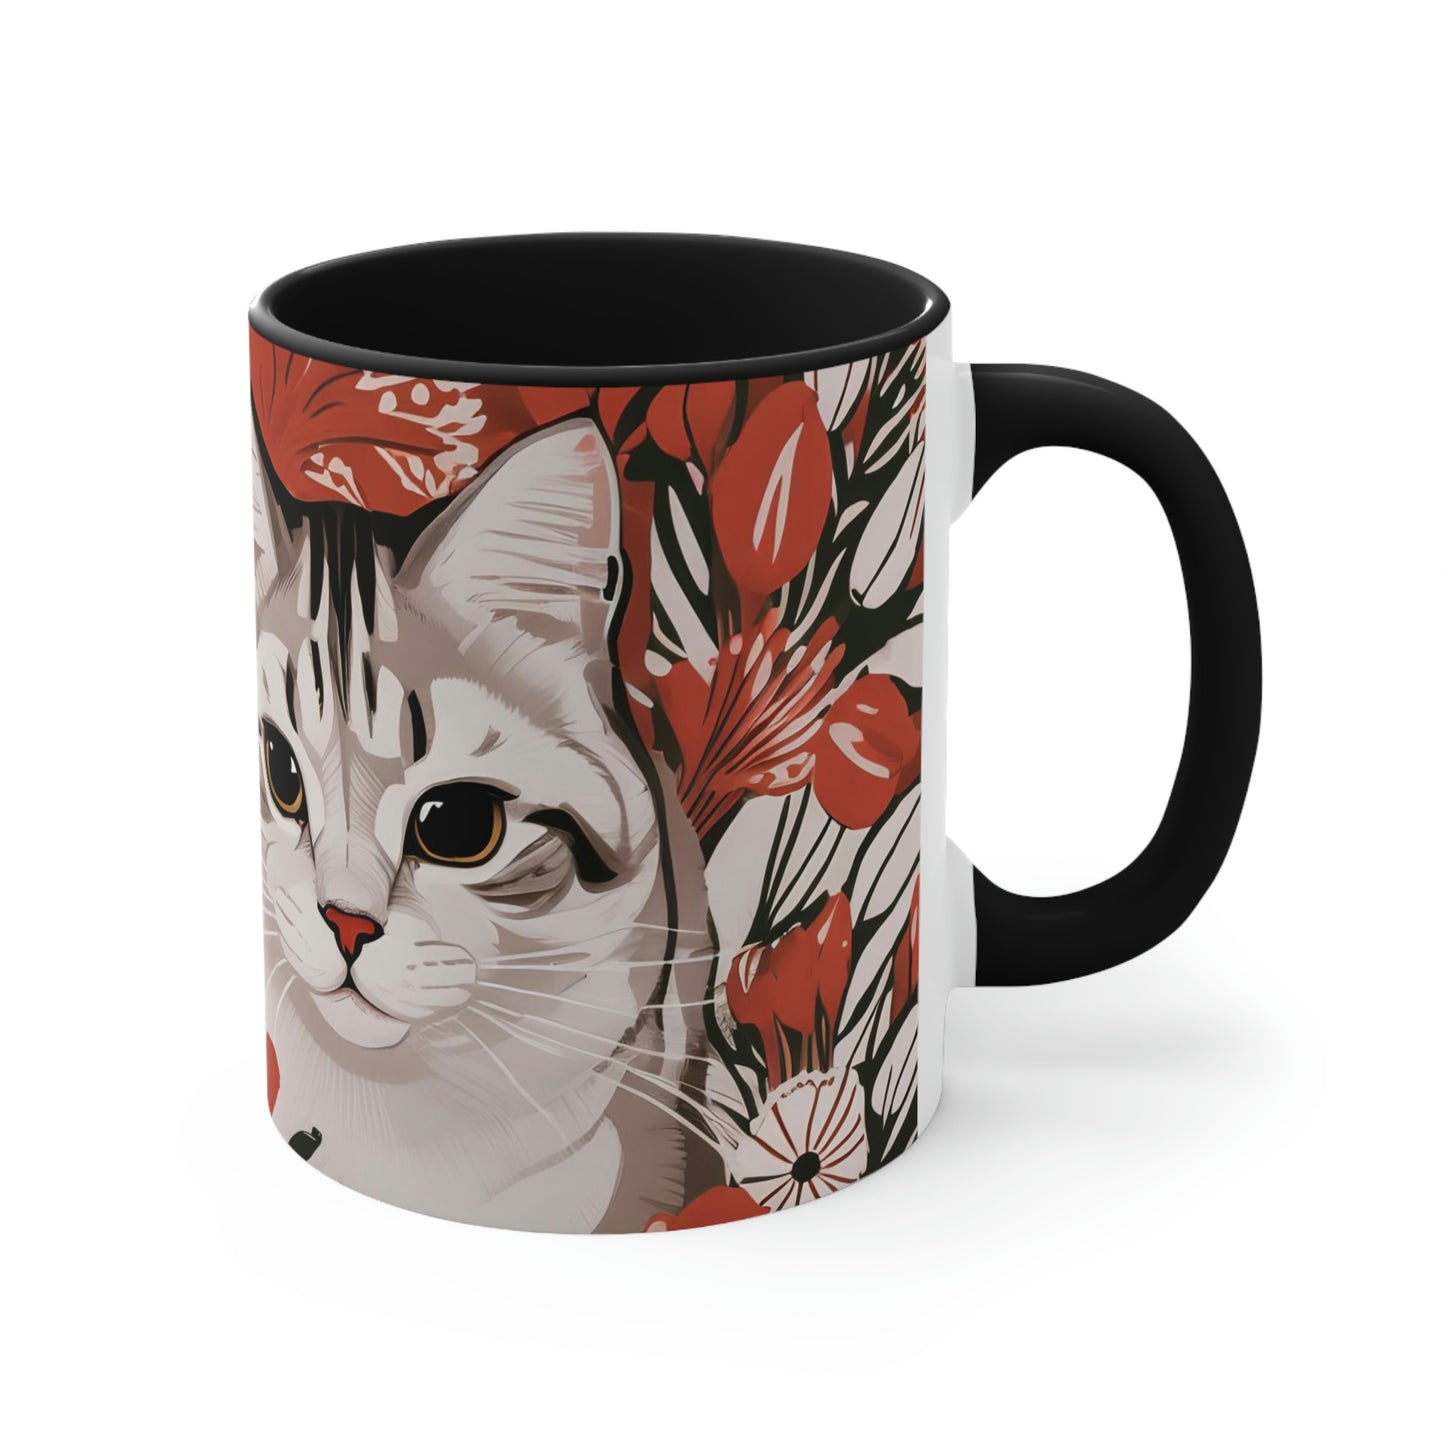 White Cats, Ceramic Mug - Perfect for Coffee, Tea, and More!